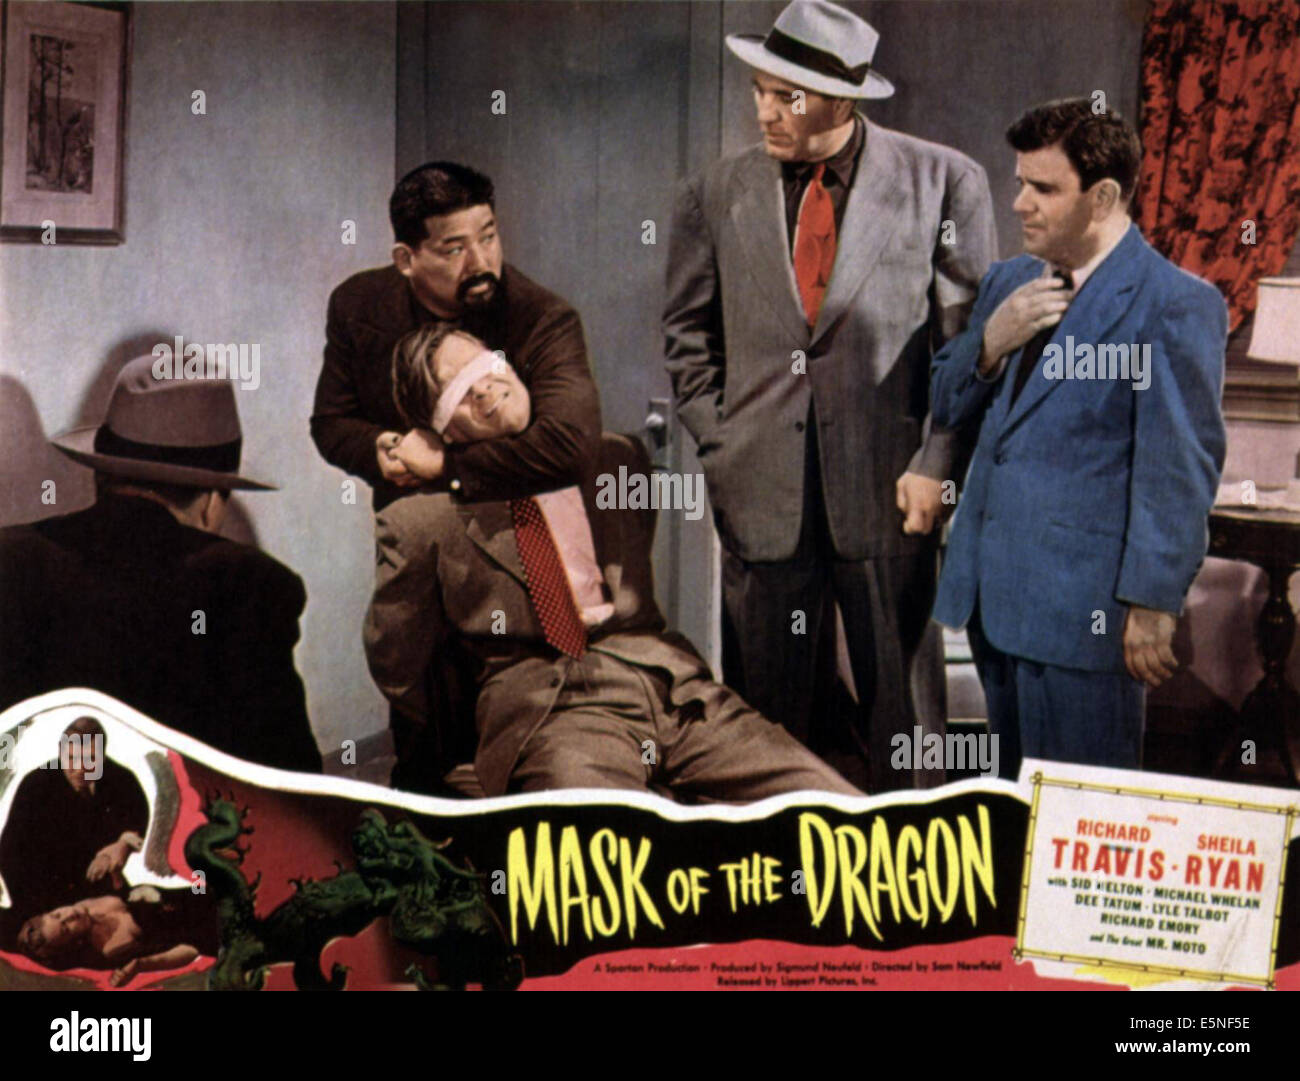 MASK OF THE DRAGON, Richard Travis, Sid Melton, 1951 Stock Photo